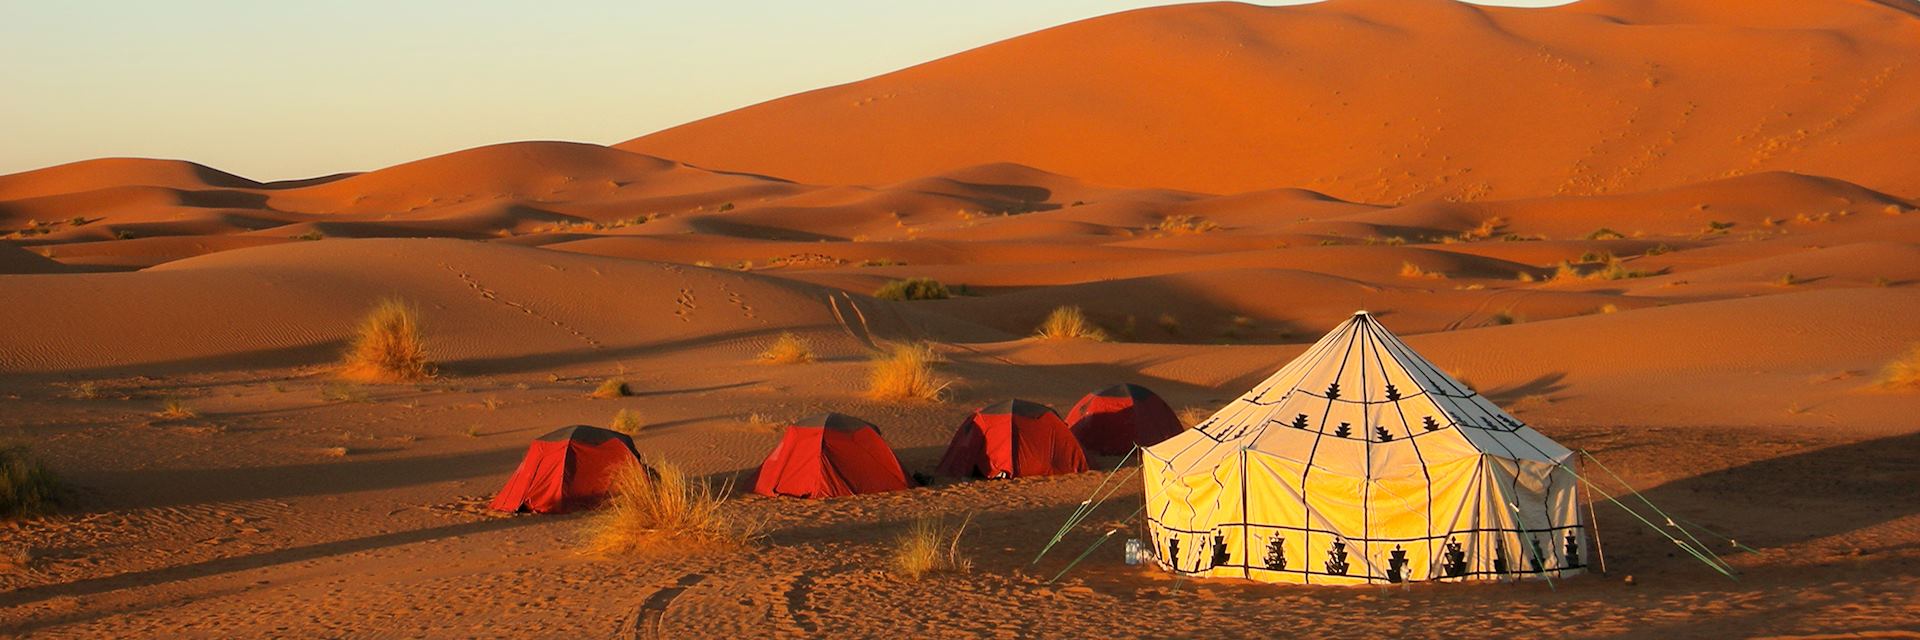 Tent in the desert